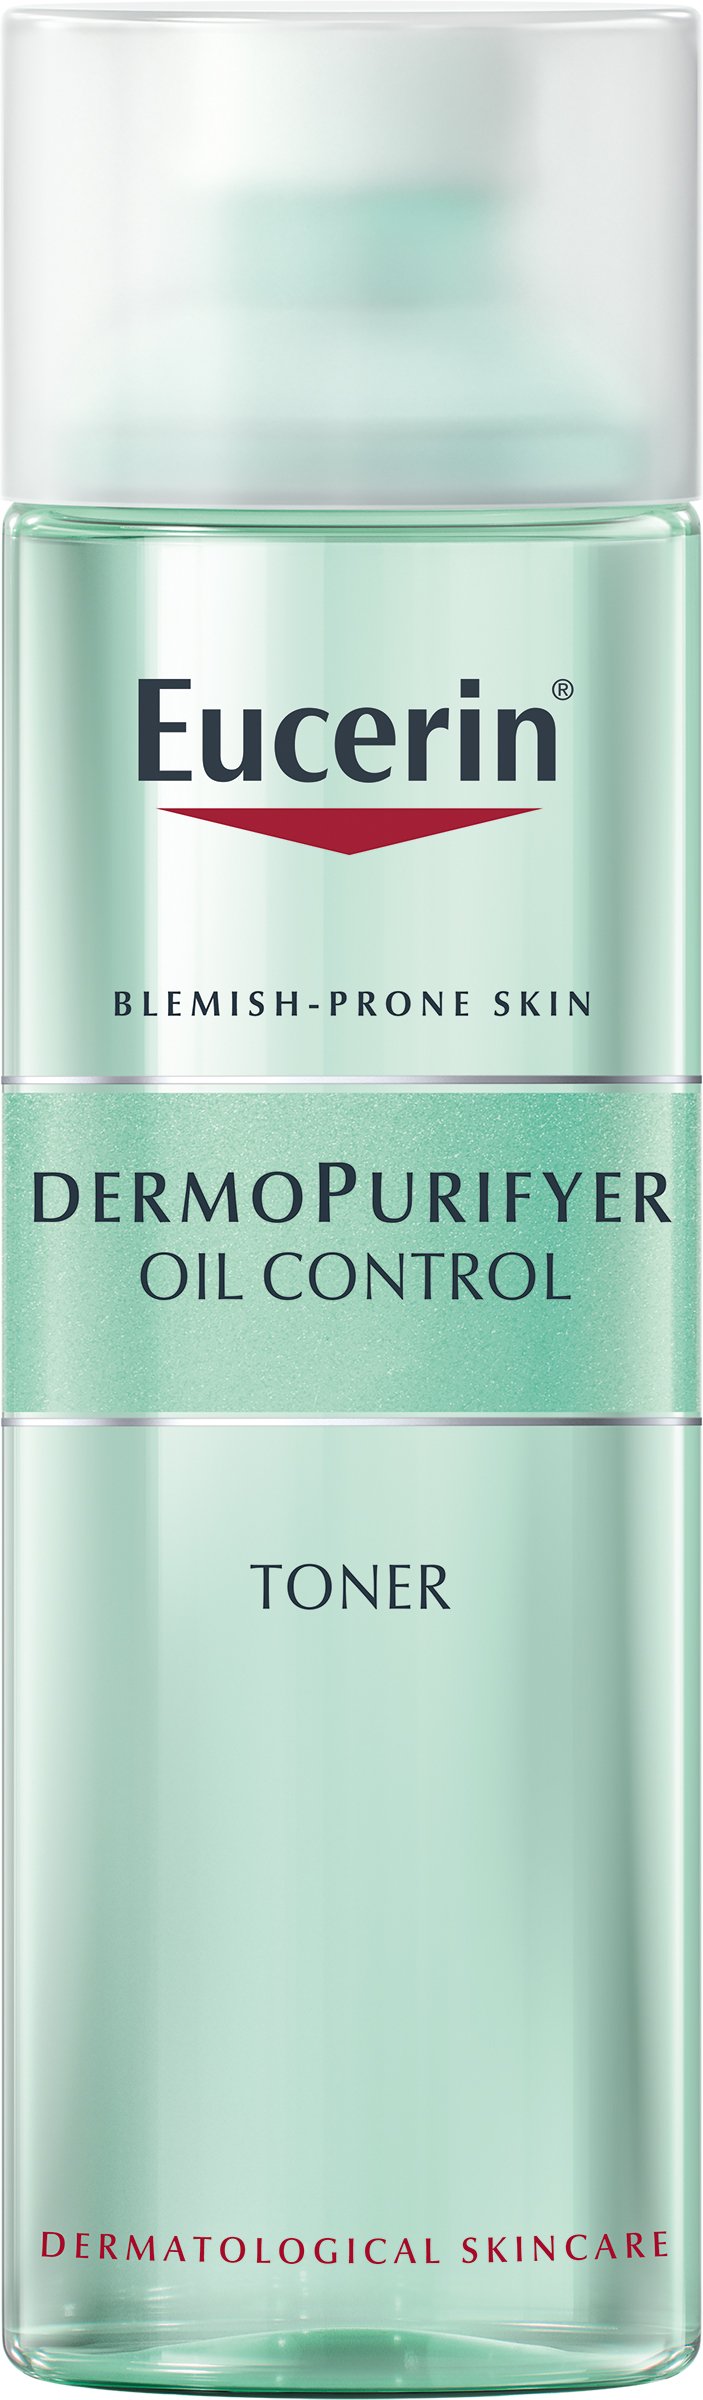 Eucerin DermoPurifyer Oil Control Toner 200 ml